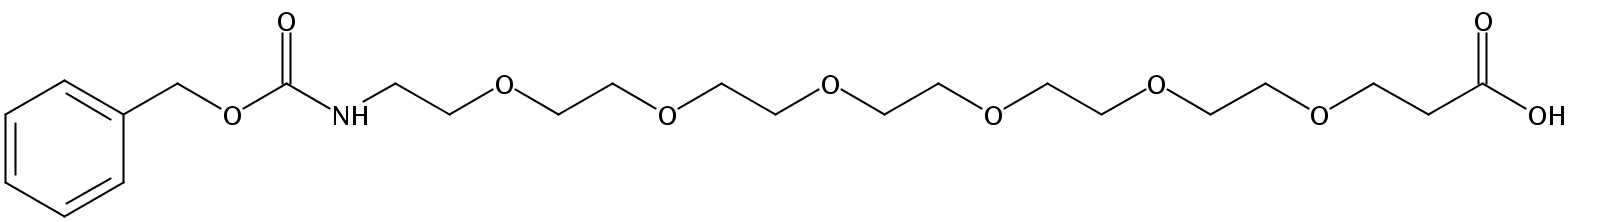 CBZ-NH-PEG6-CH2CH2COOH;CBZ-21-Amino-4,7,10,13,16,19-hexaoxaheneicosanoic acid